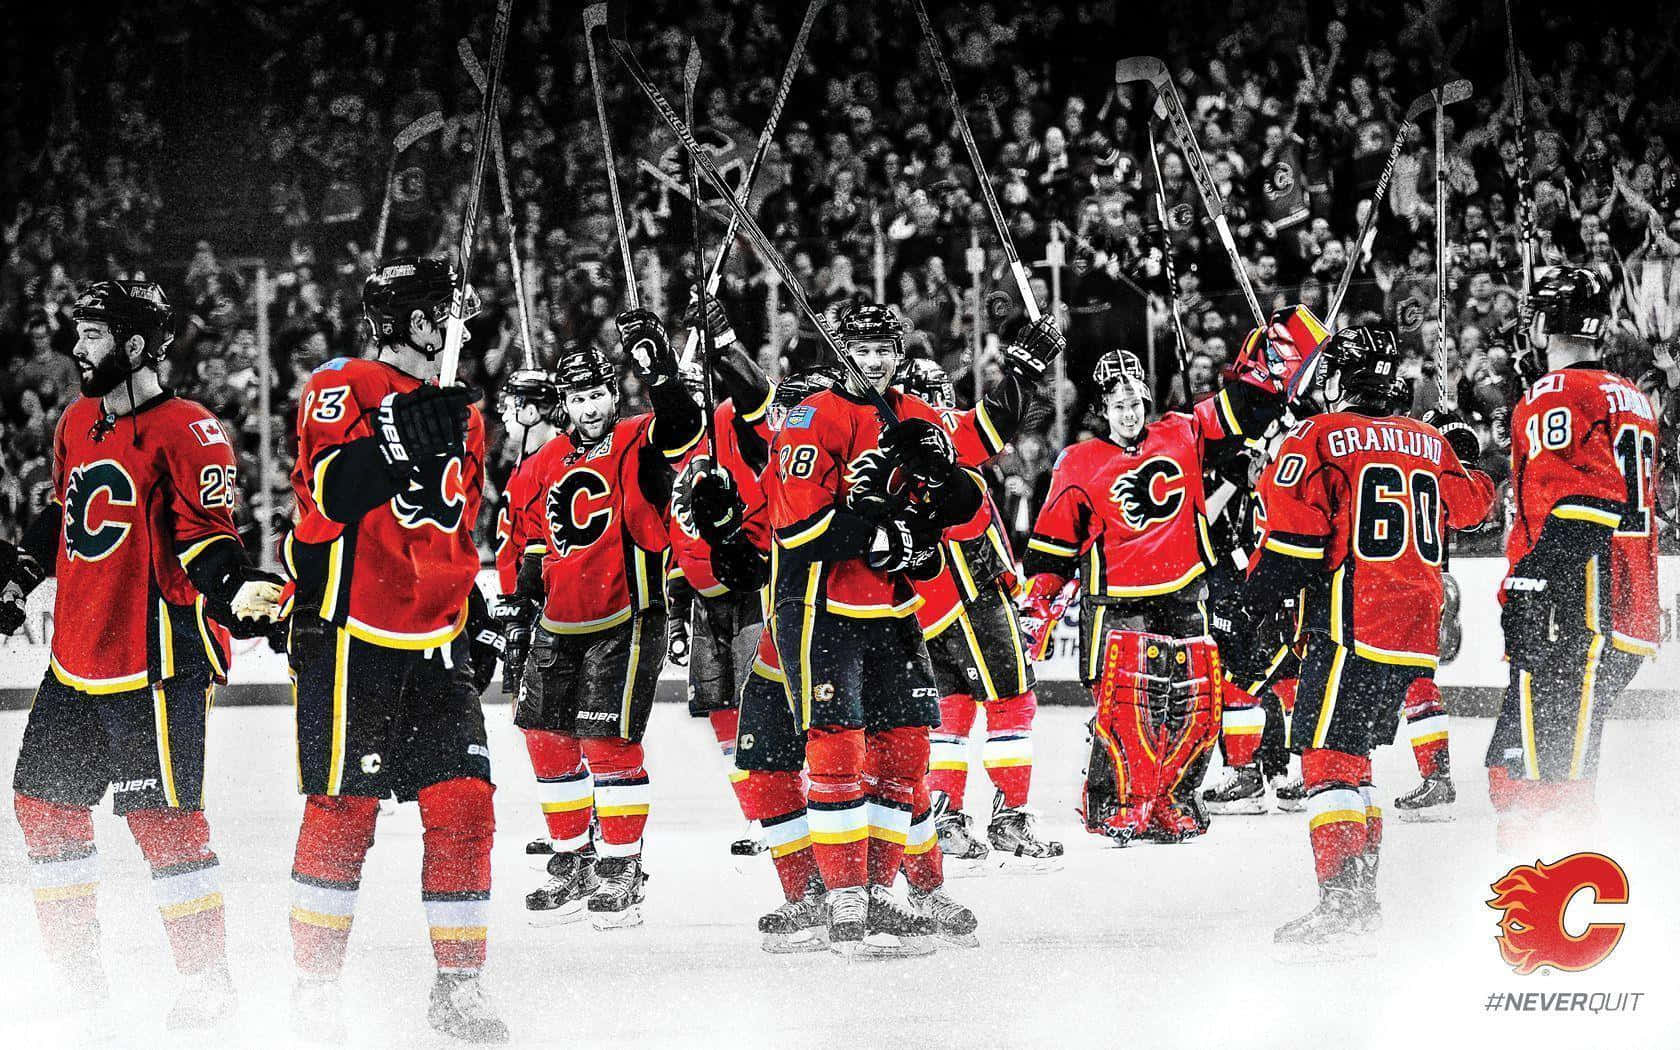 "Show your Calgary Flames pride!"